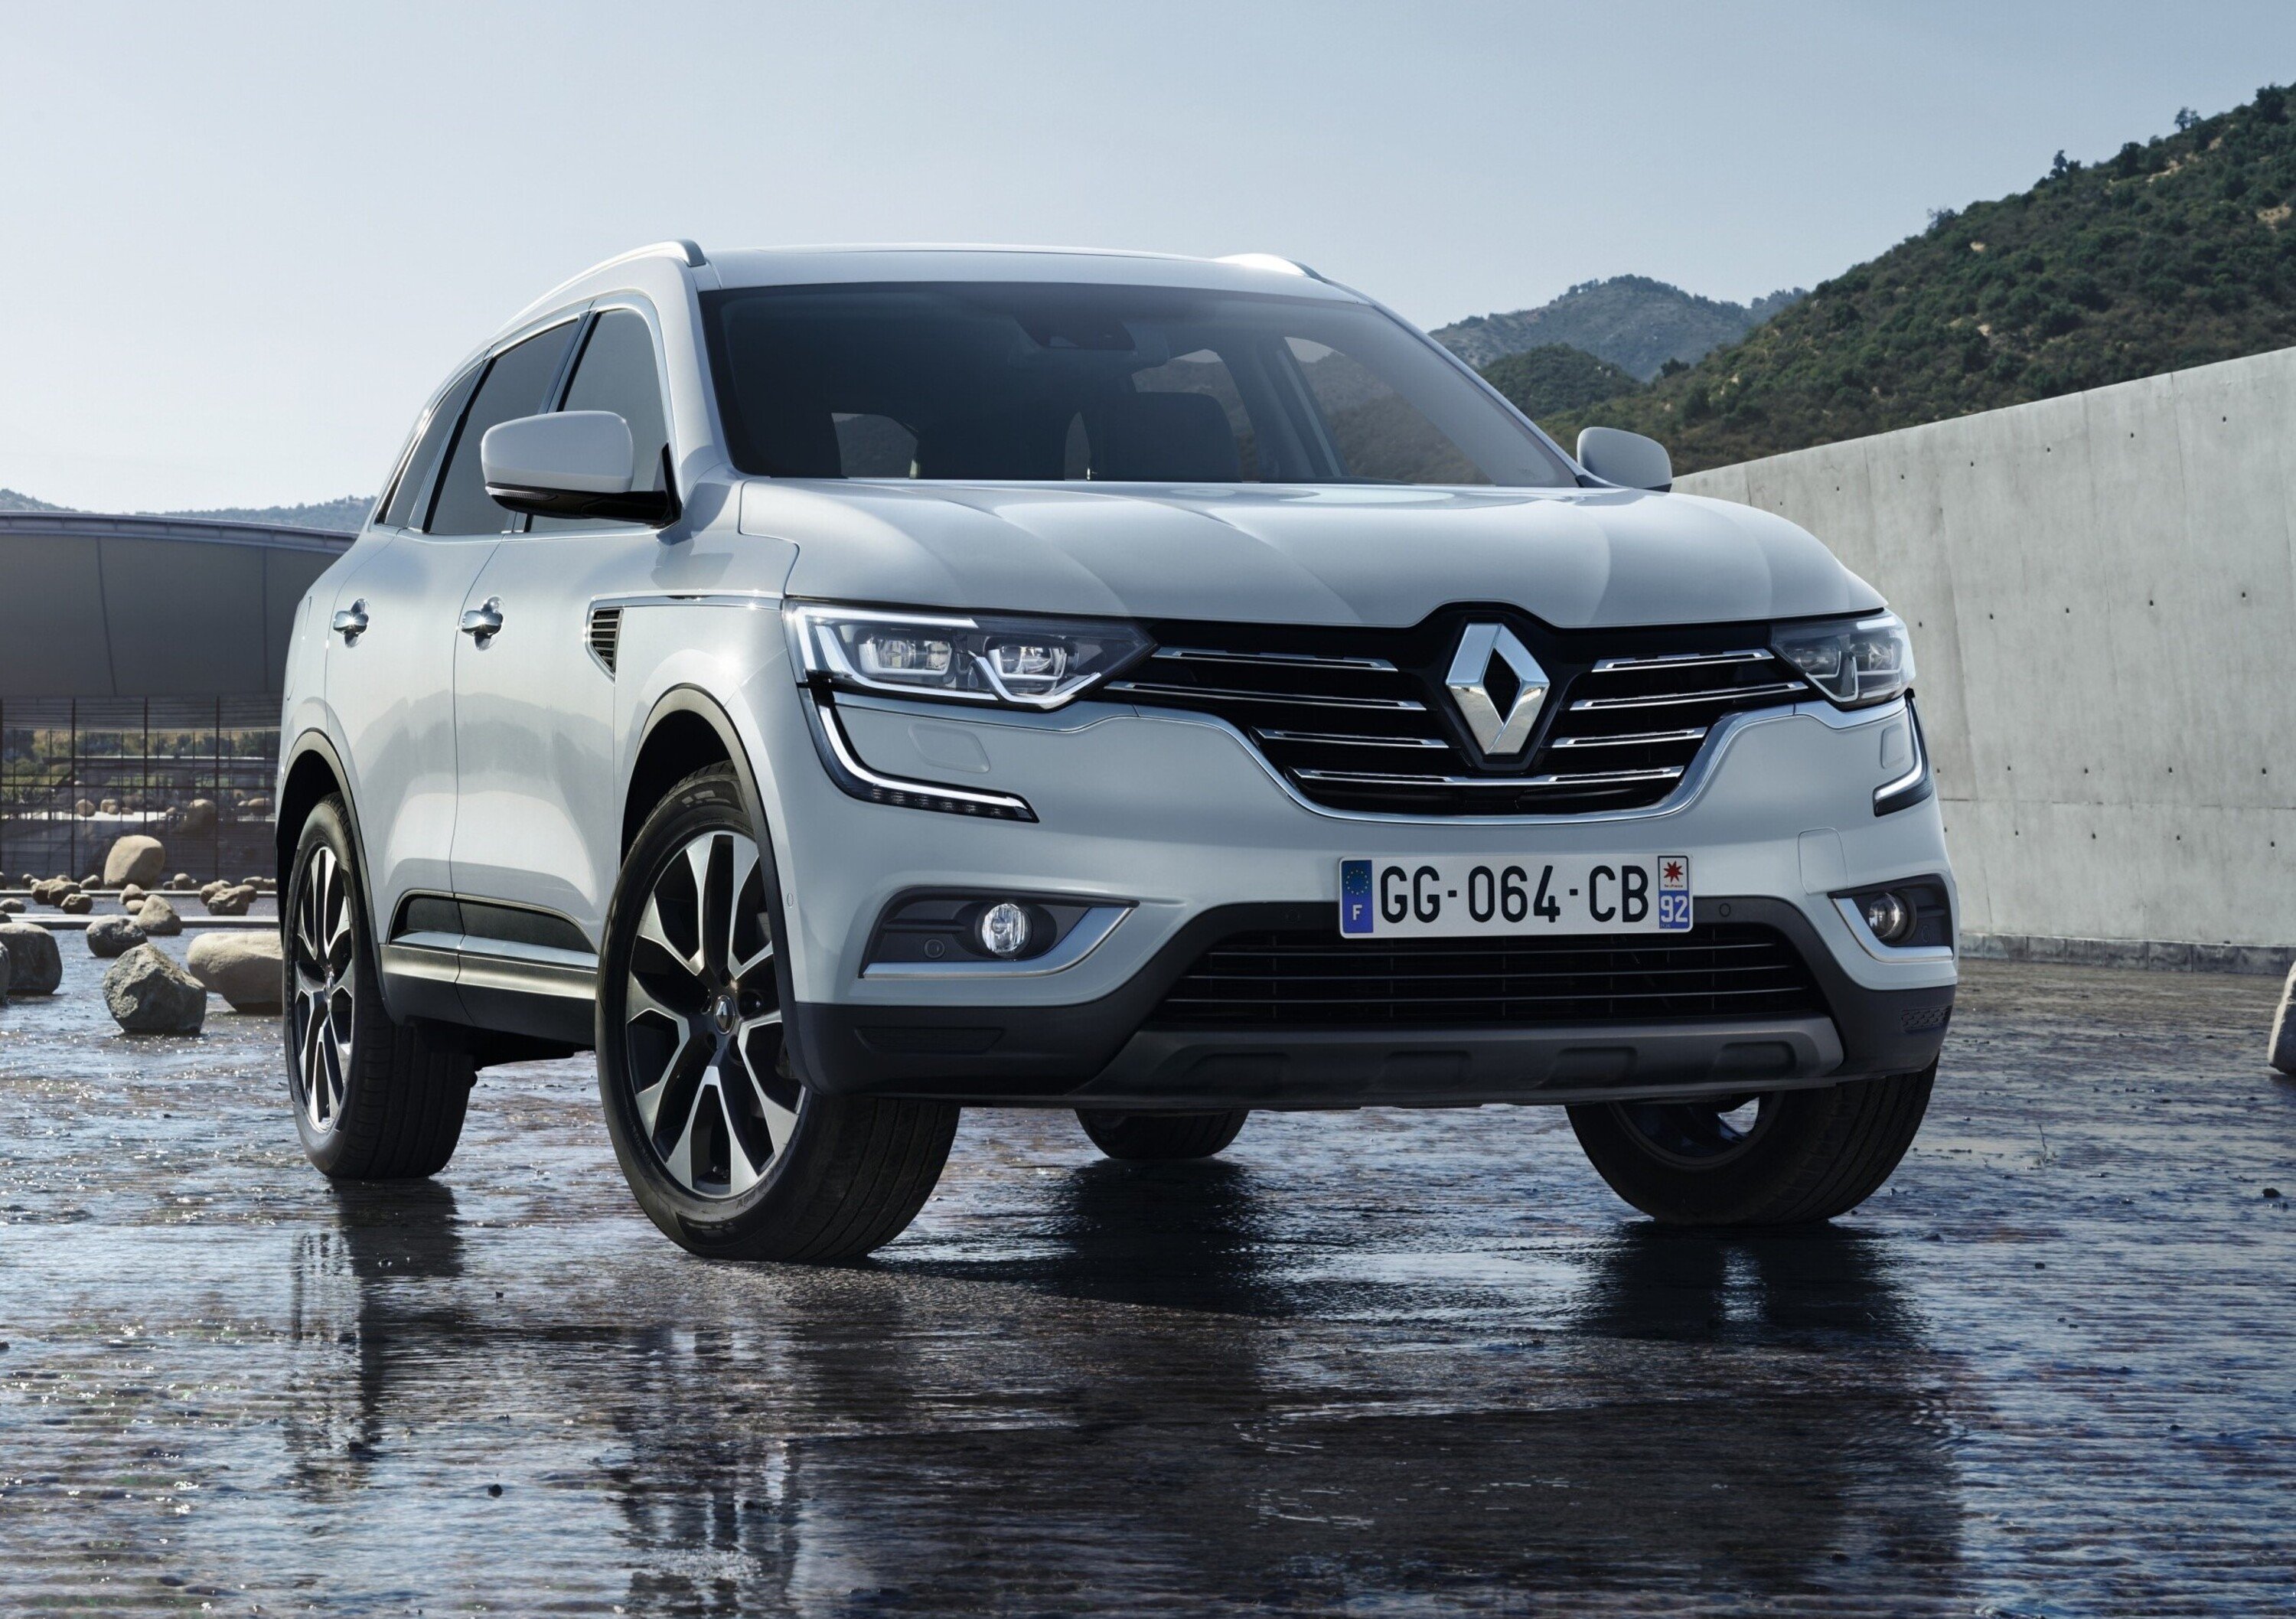 Nuova Renault Koleos: svelata la seconda generazione